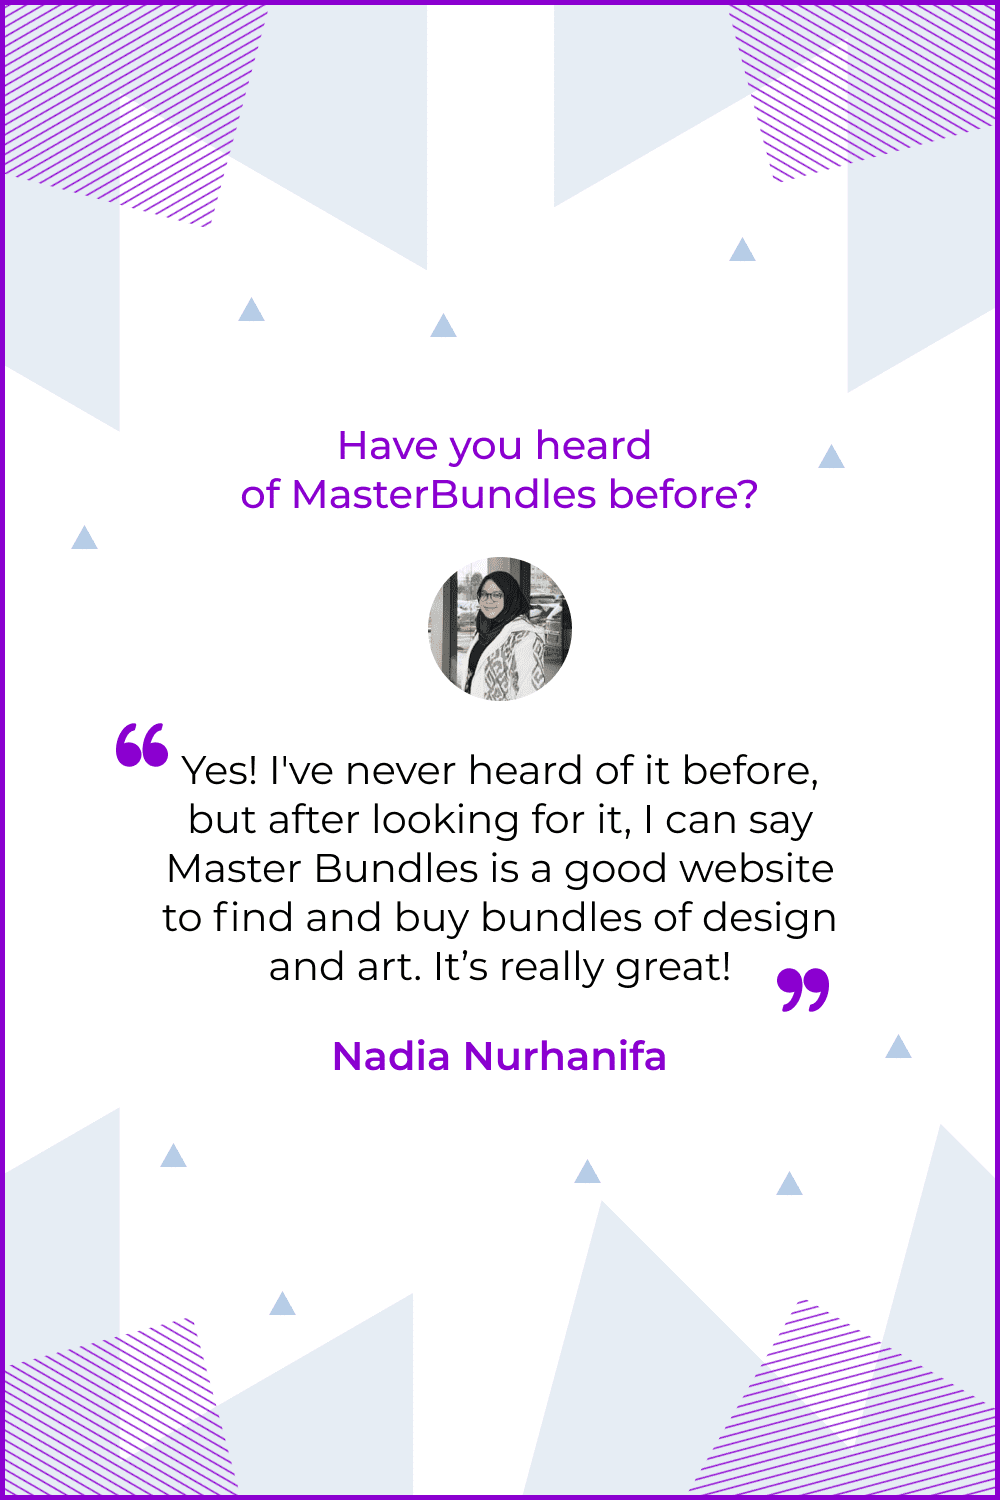 Nadia Nurhanifa quote.